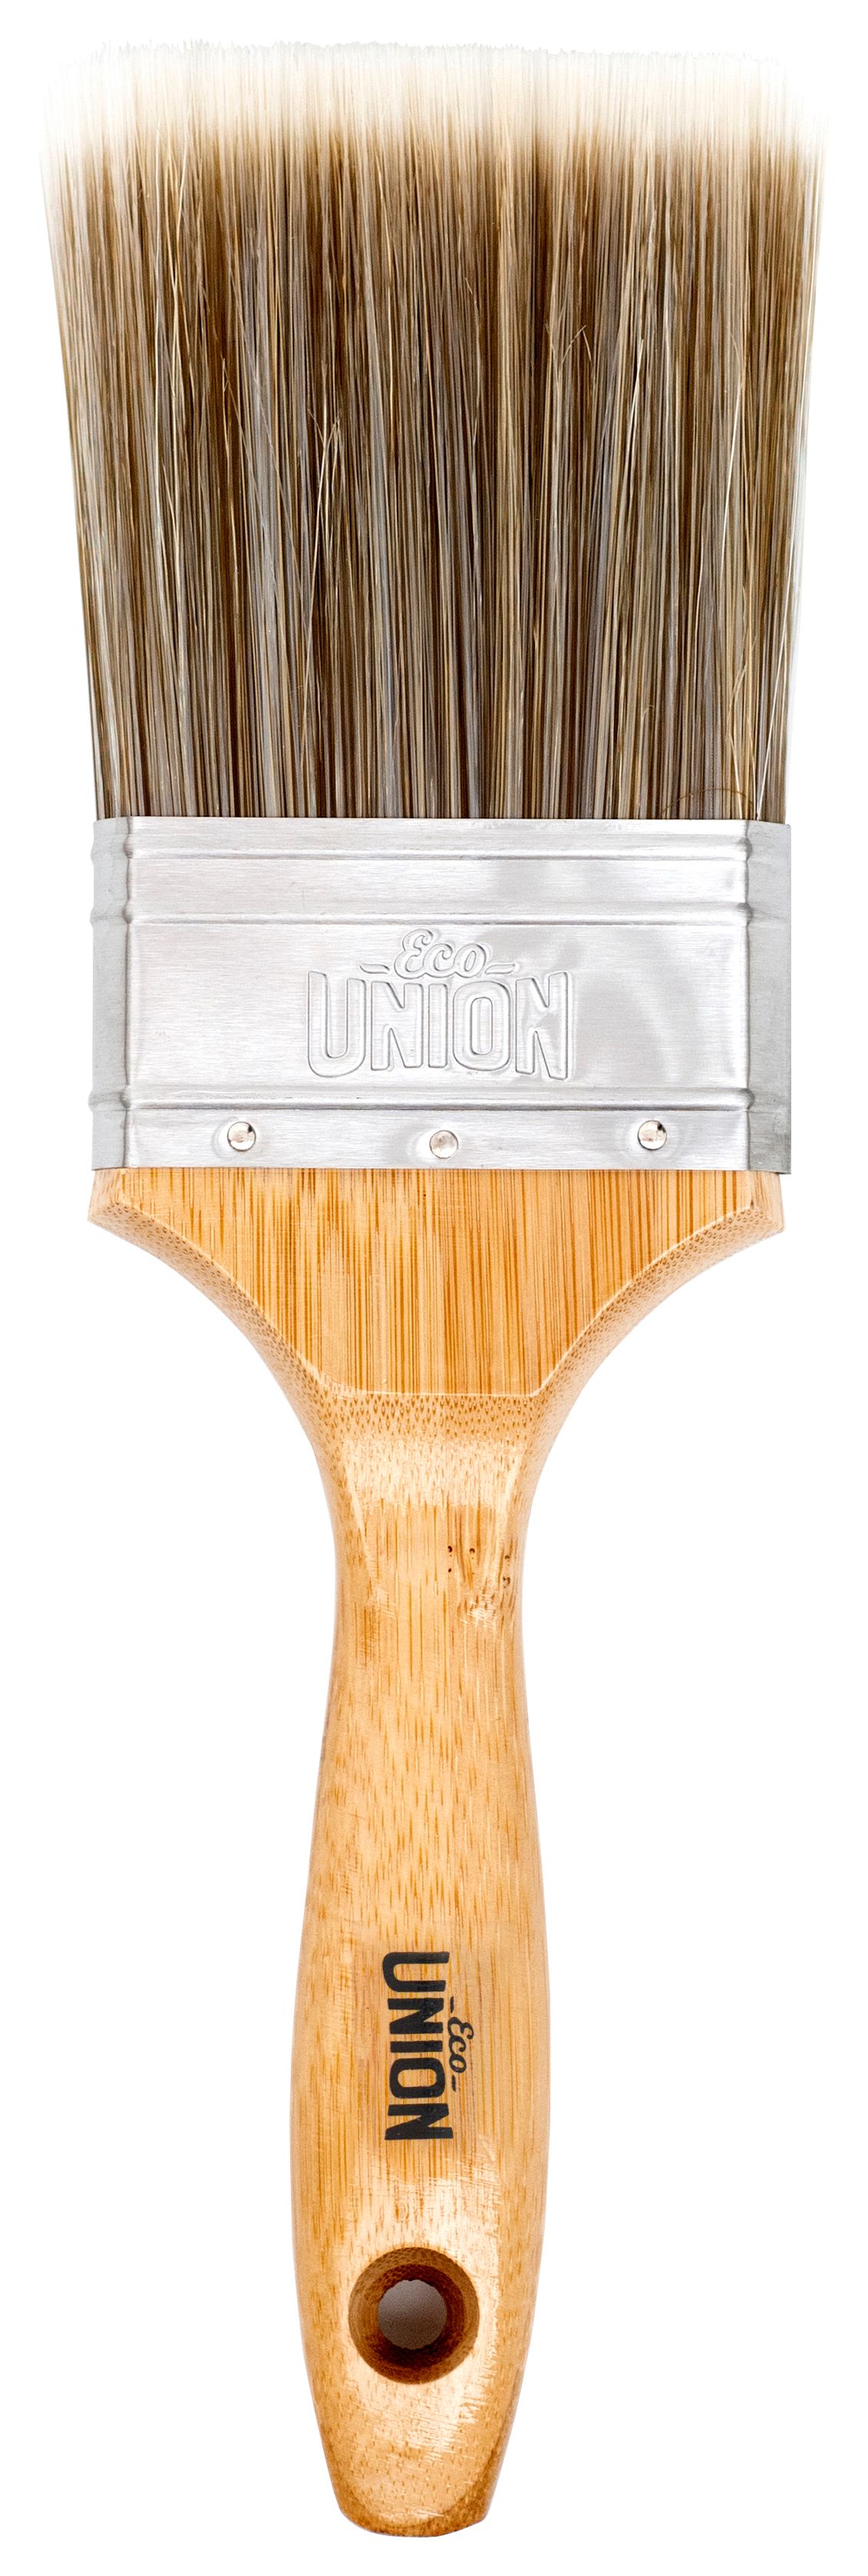 Image of Eco Union Pro Paint Brush - 3in